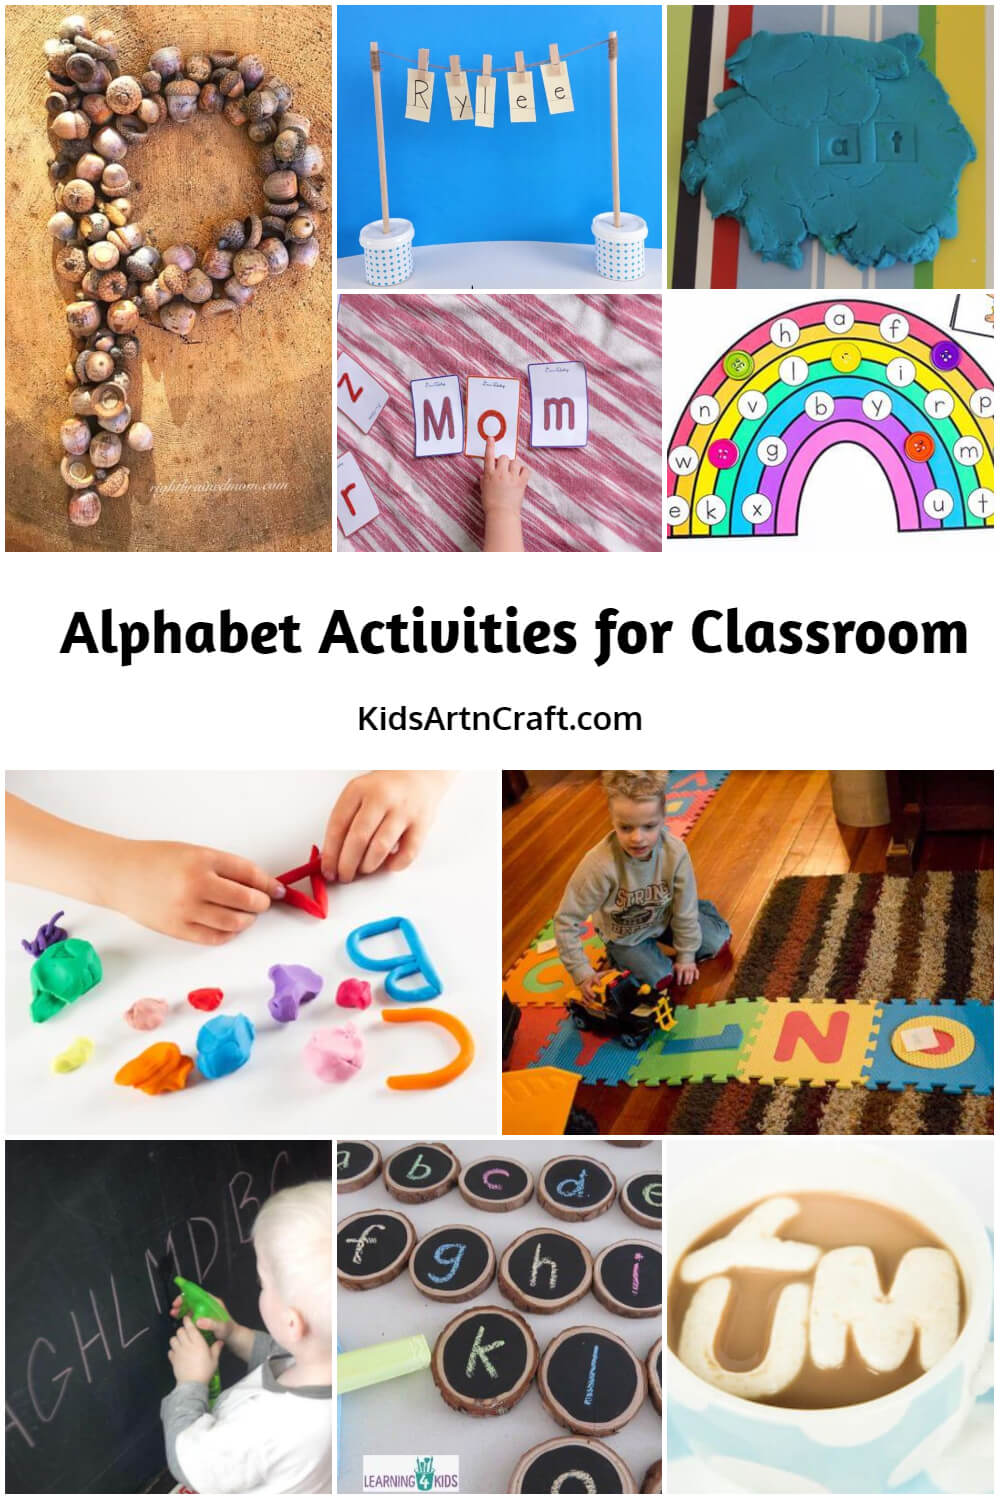  Alphabet Activities for Classroom